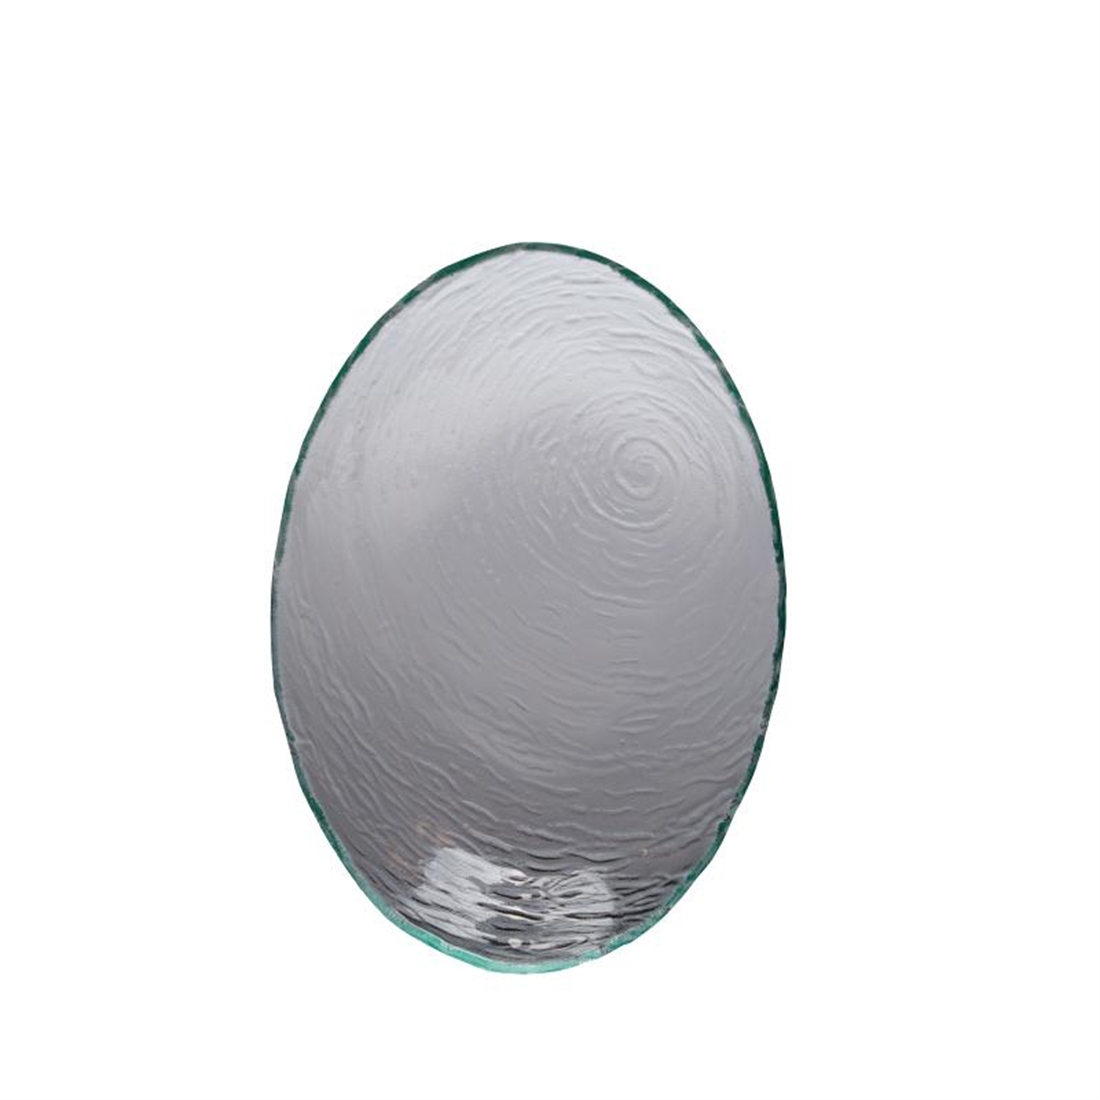 Steelite Scape Glass Oval Bowls 300mm